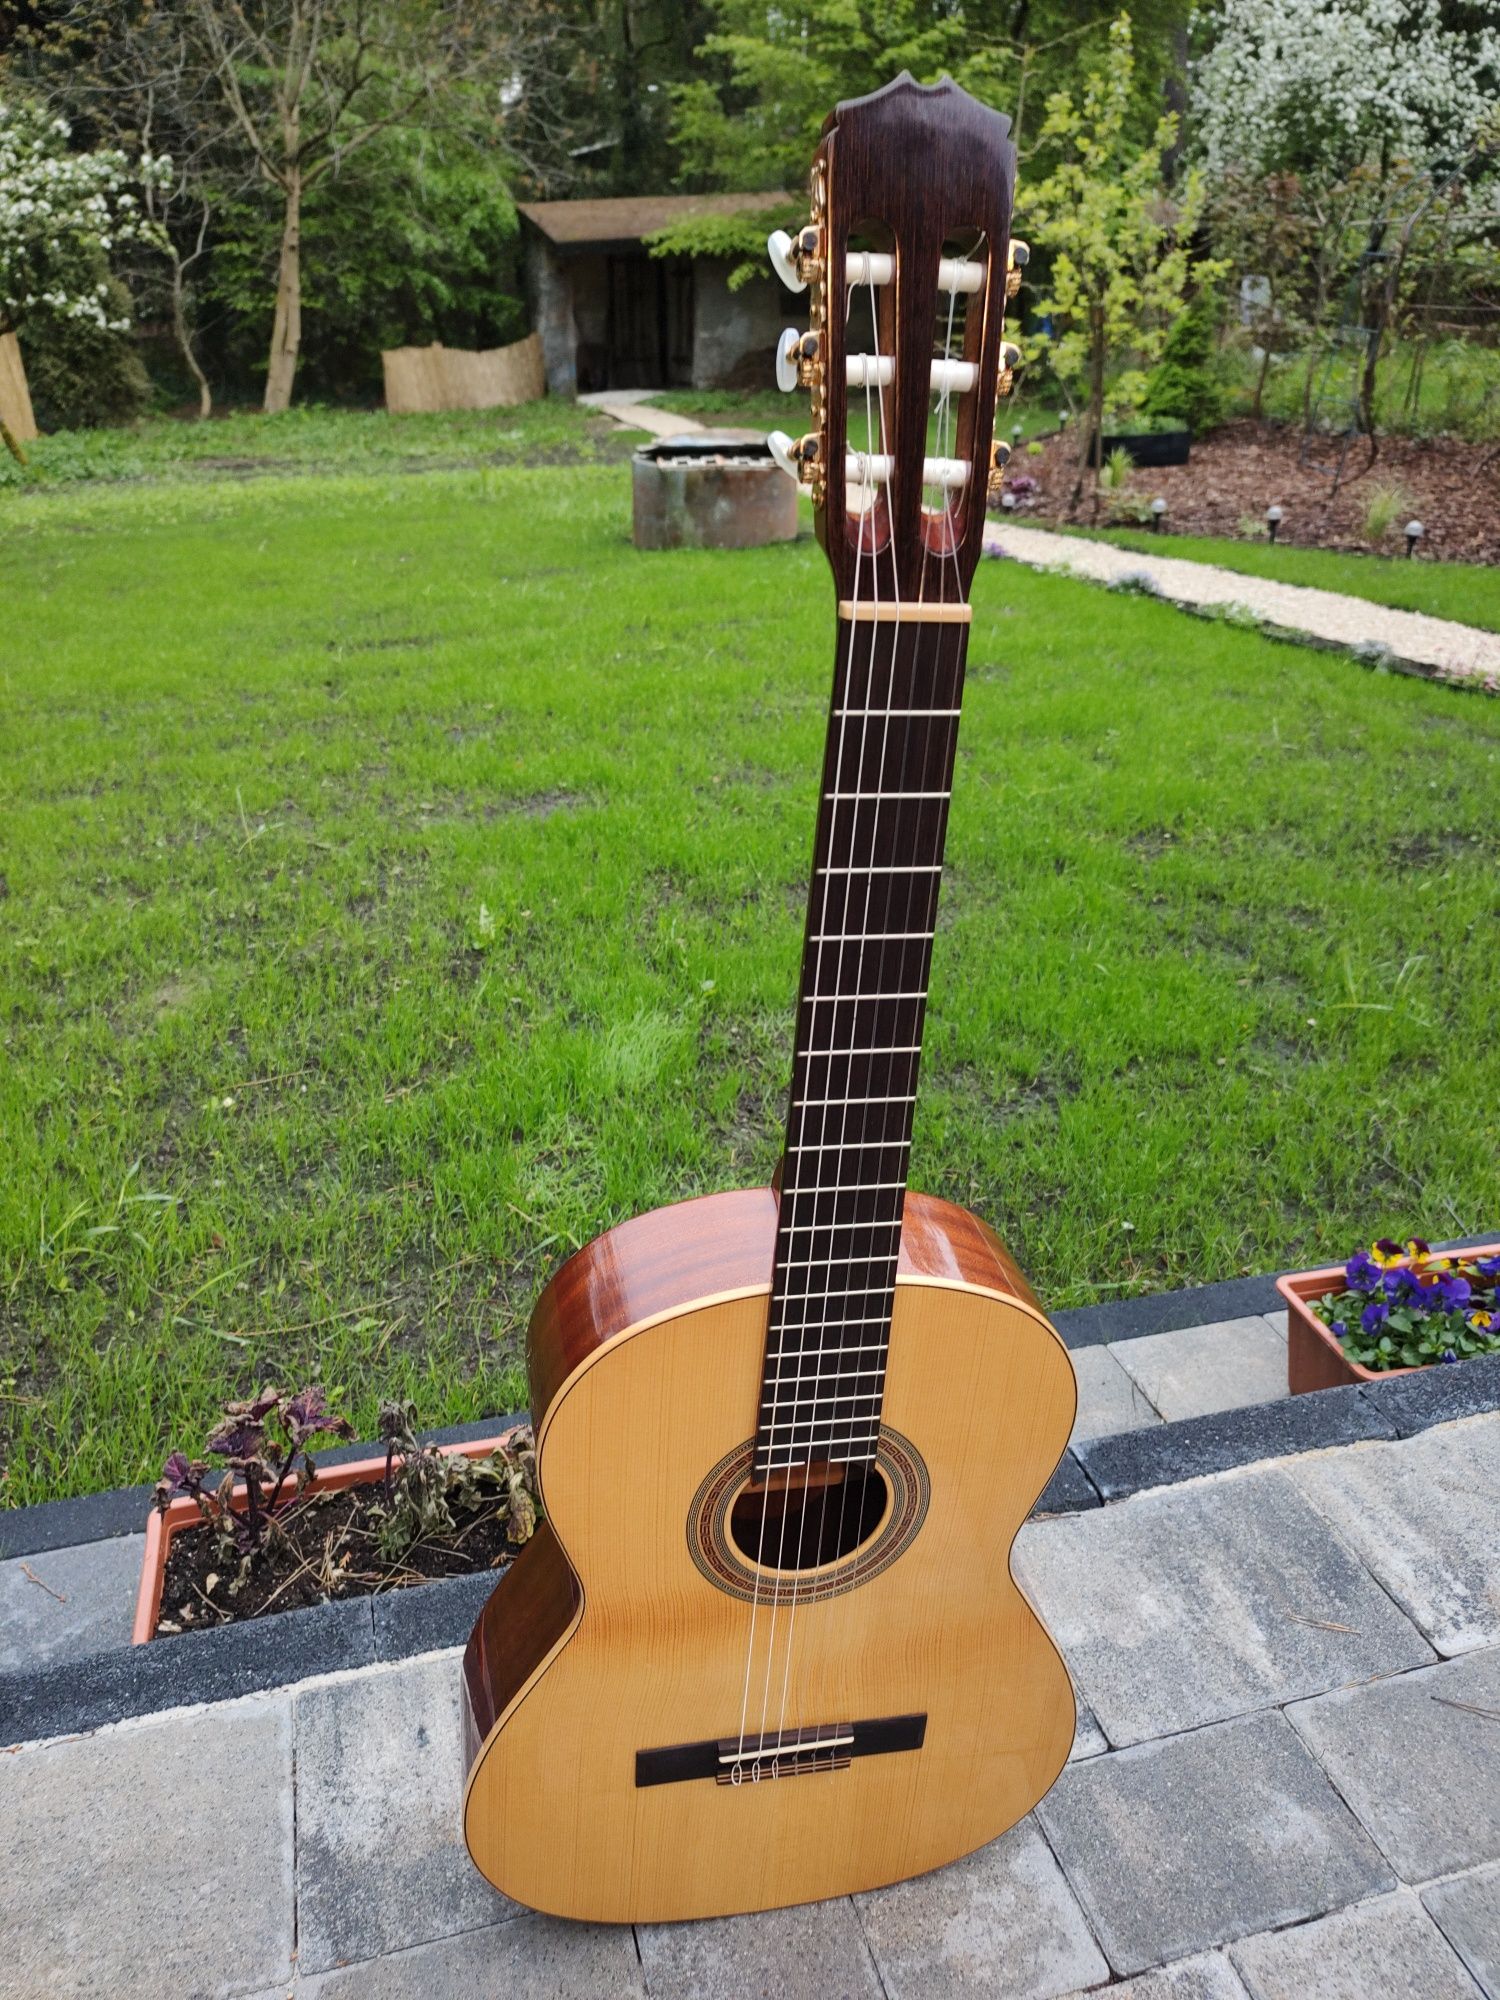 NOWA Piękna Kremona Granada gitara klasyczna  Superwygodna Cudo brzmi